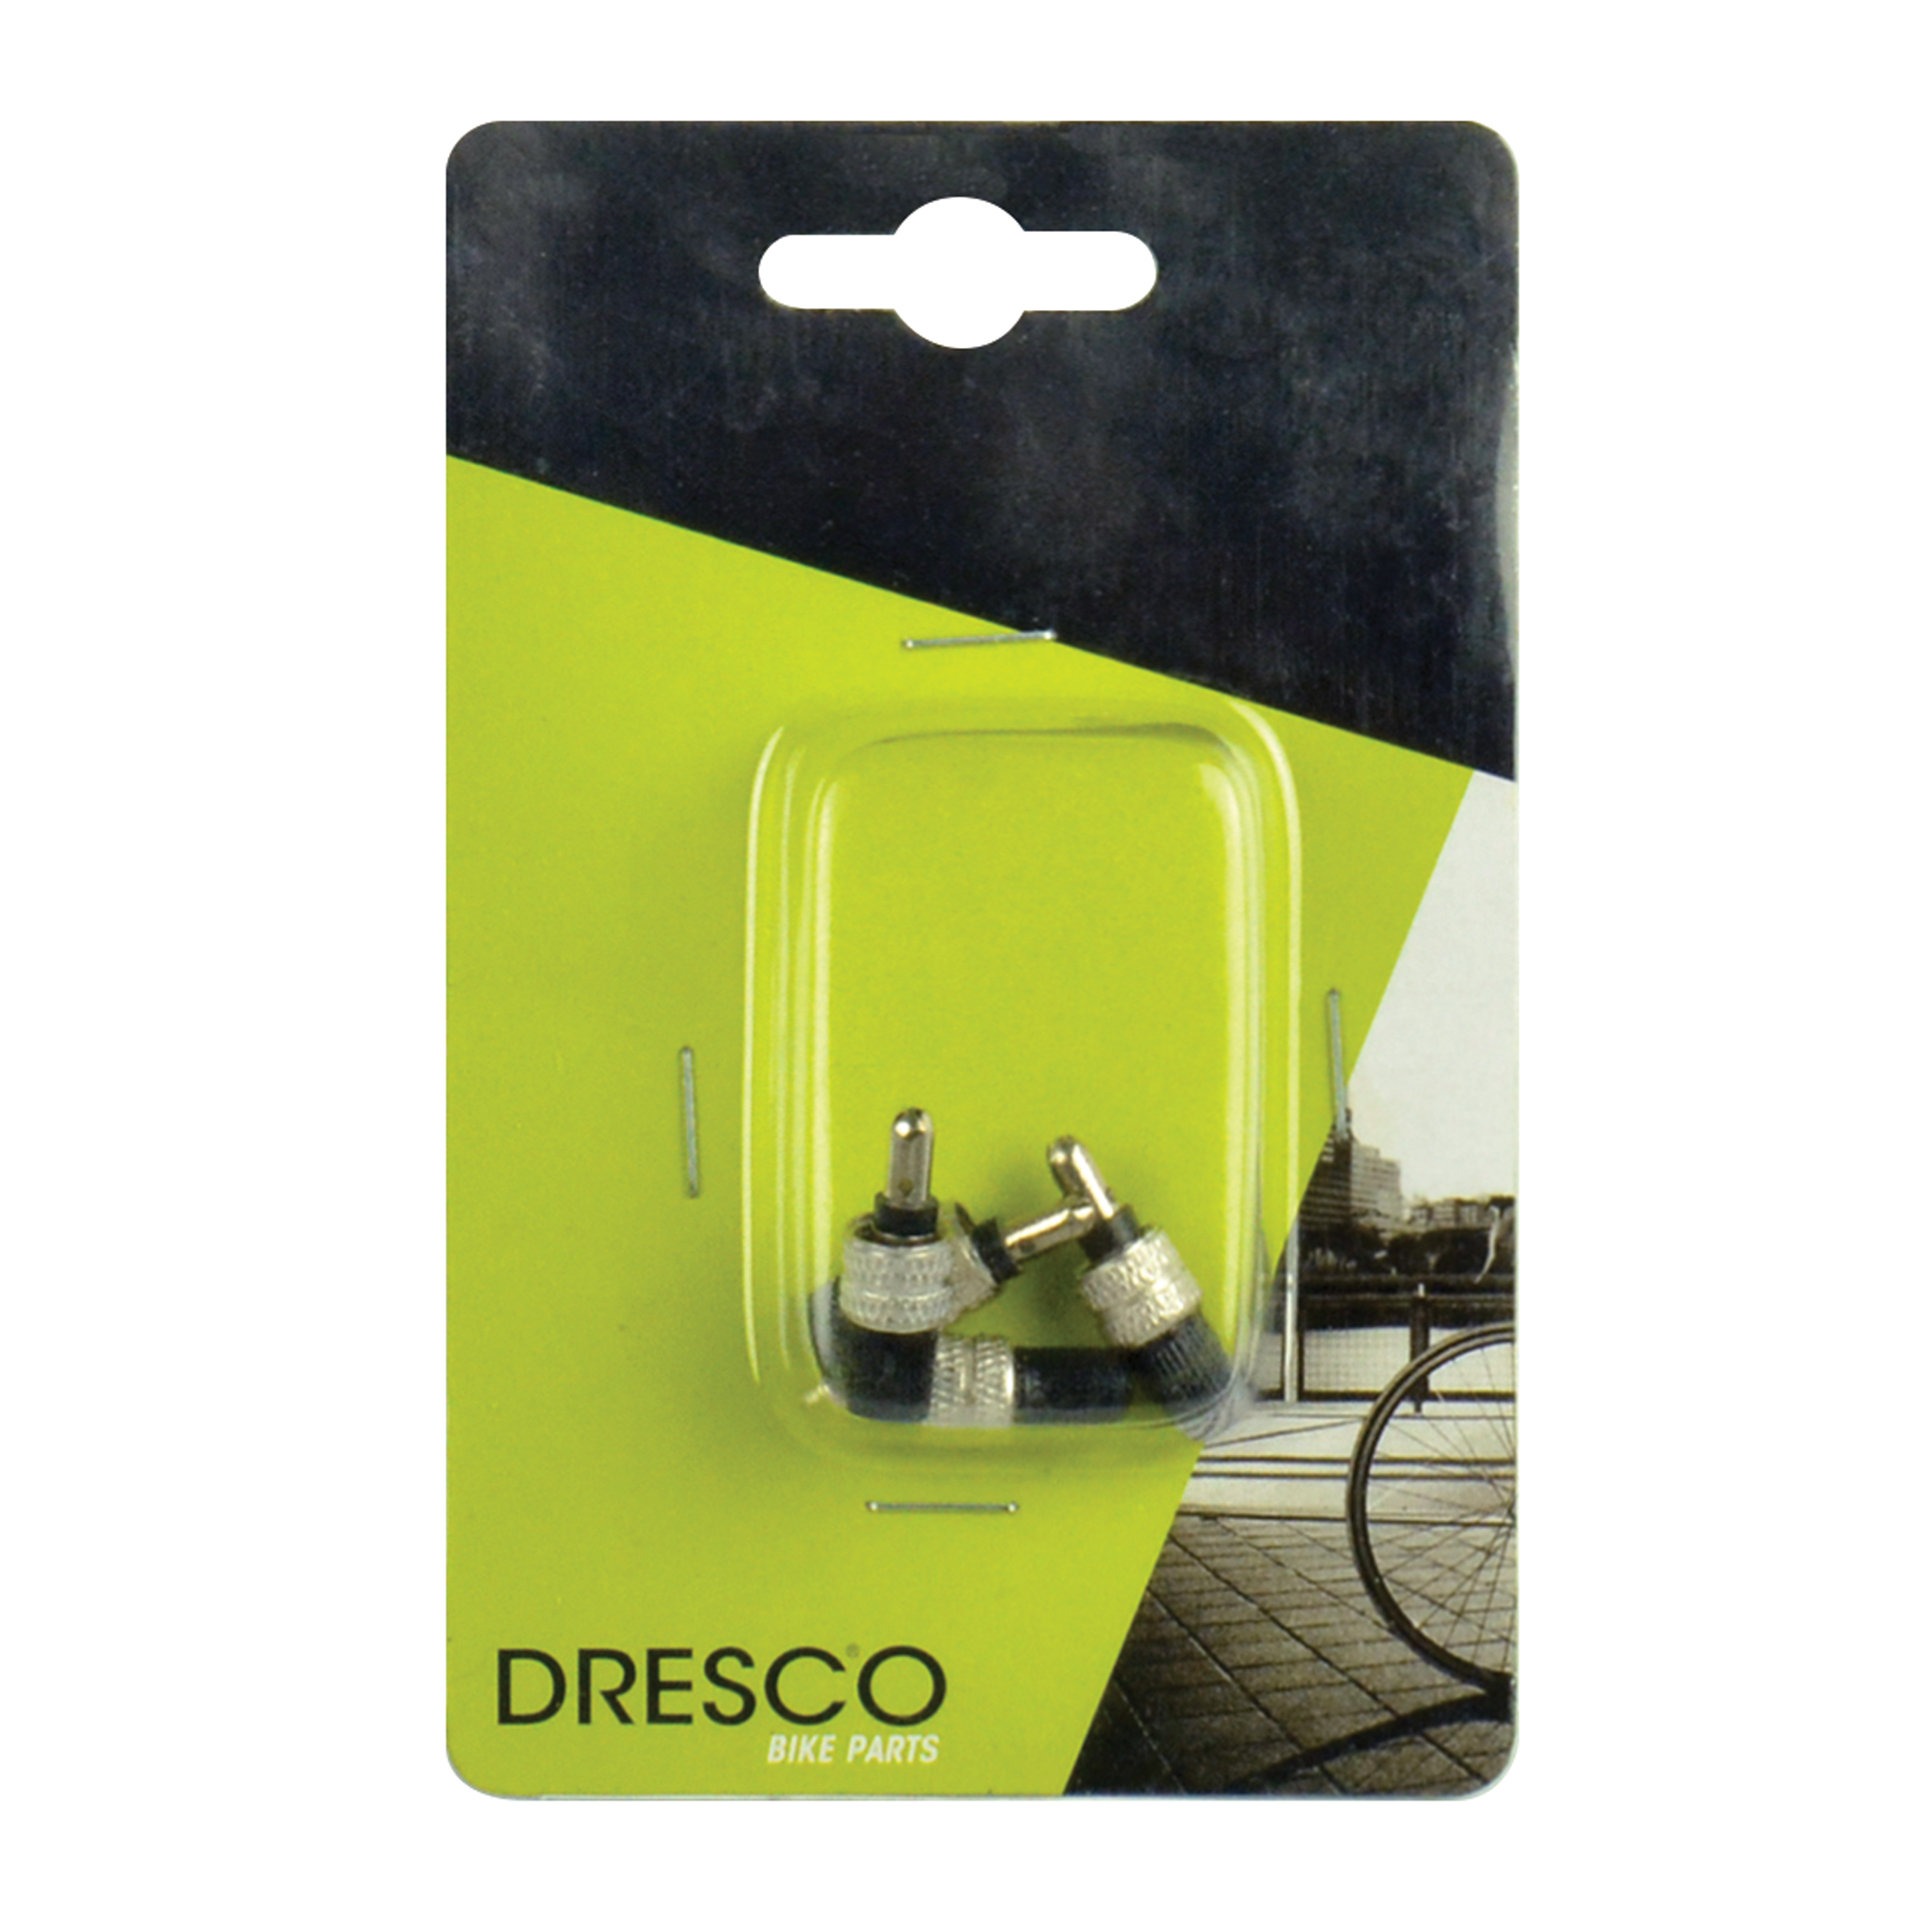 Dresco Dresco Blitz ventielen 4 stuks 5251505